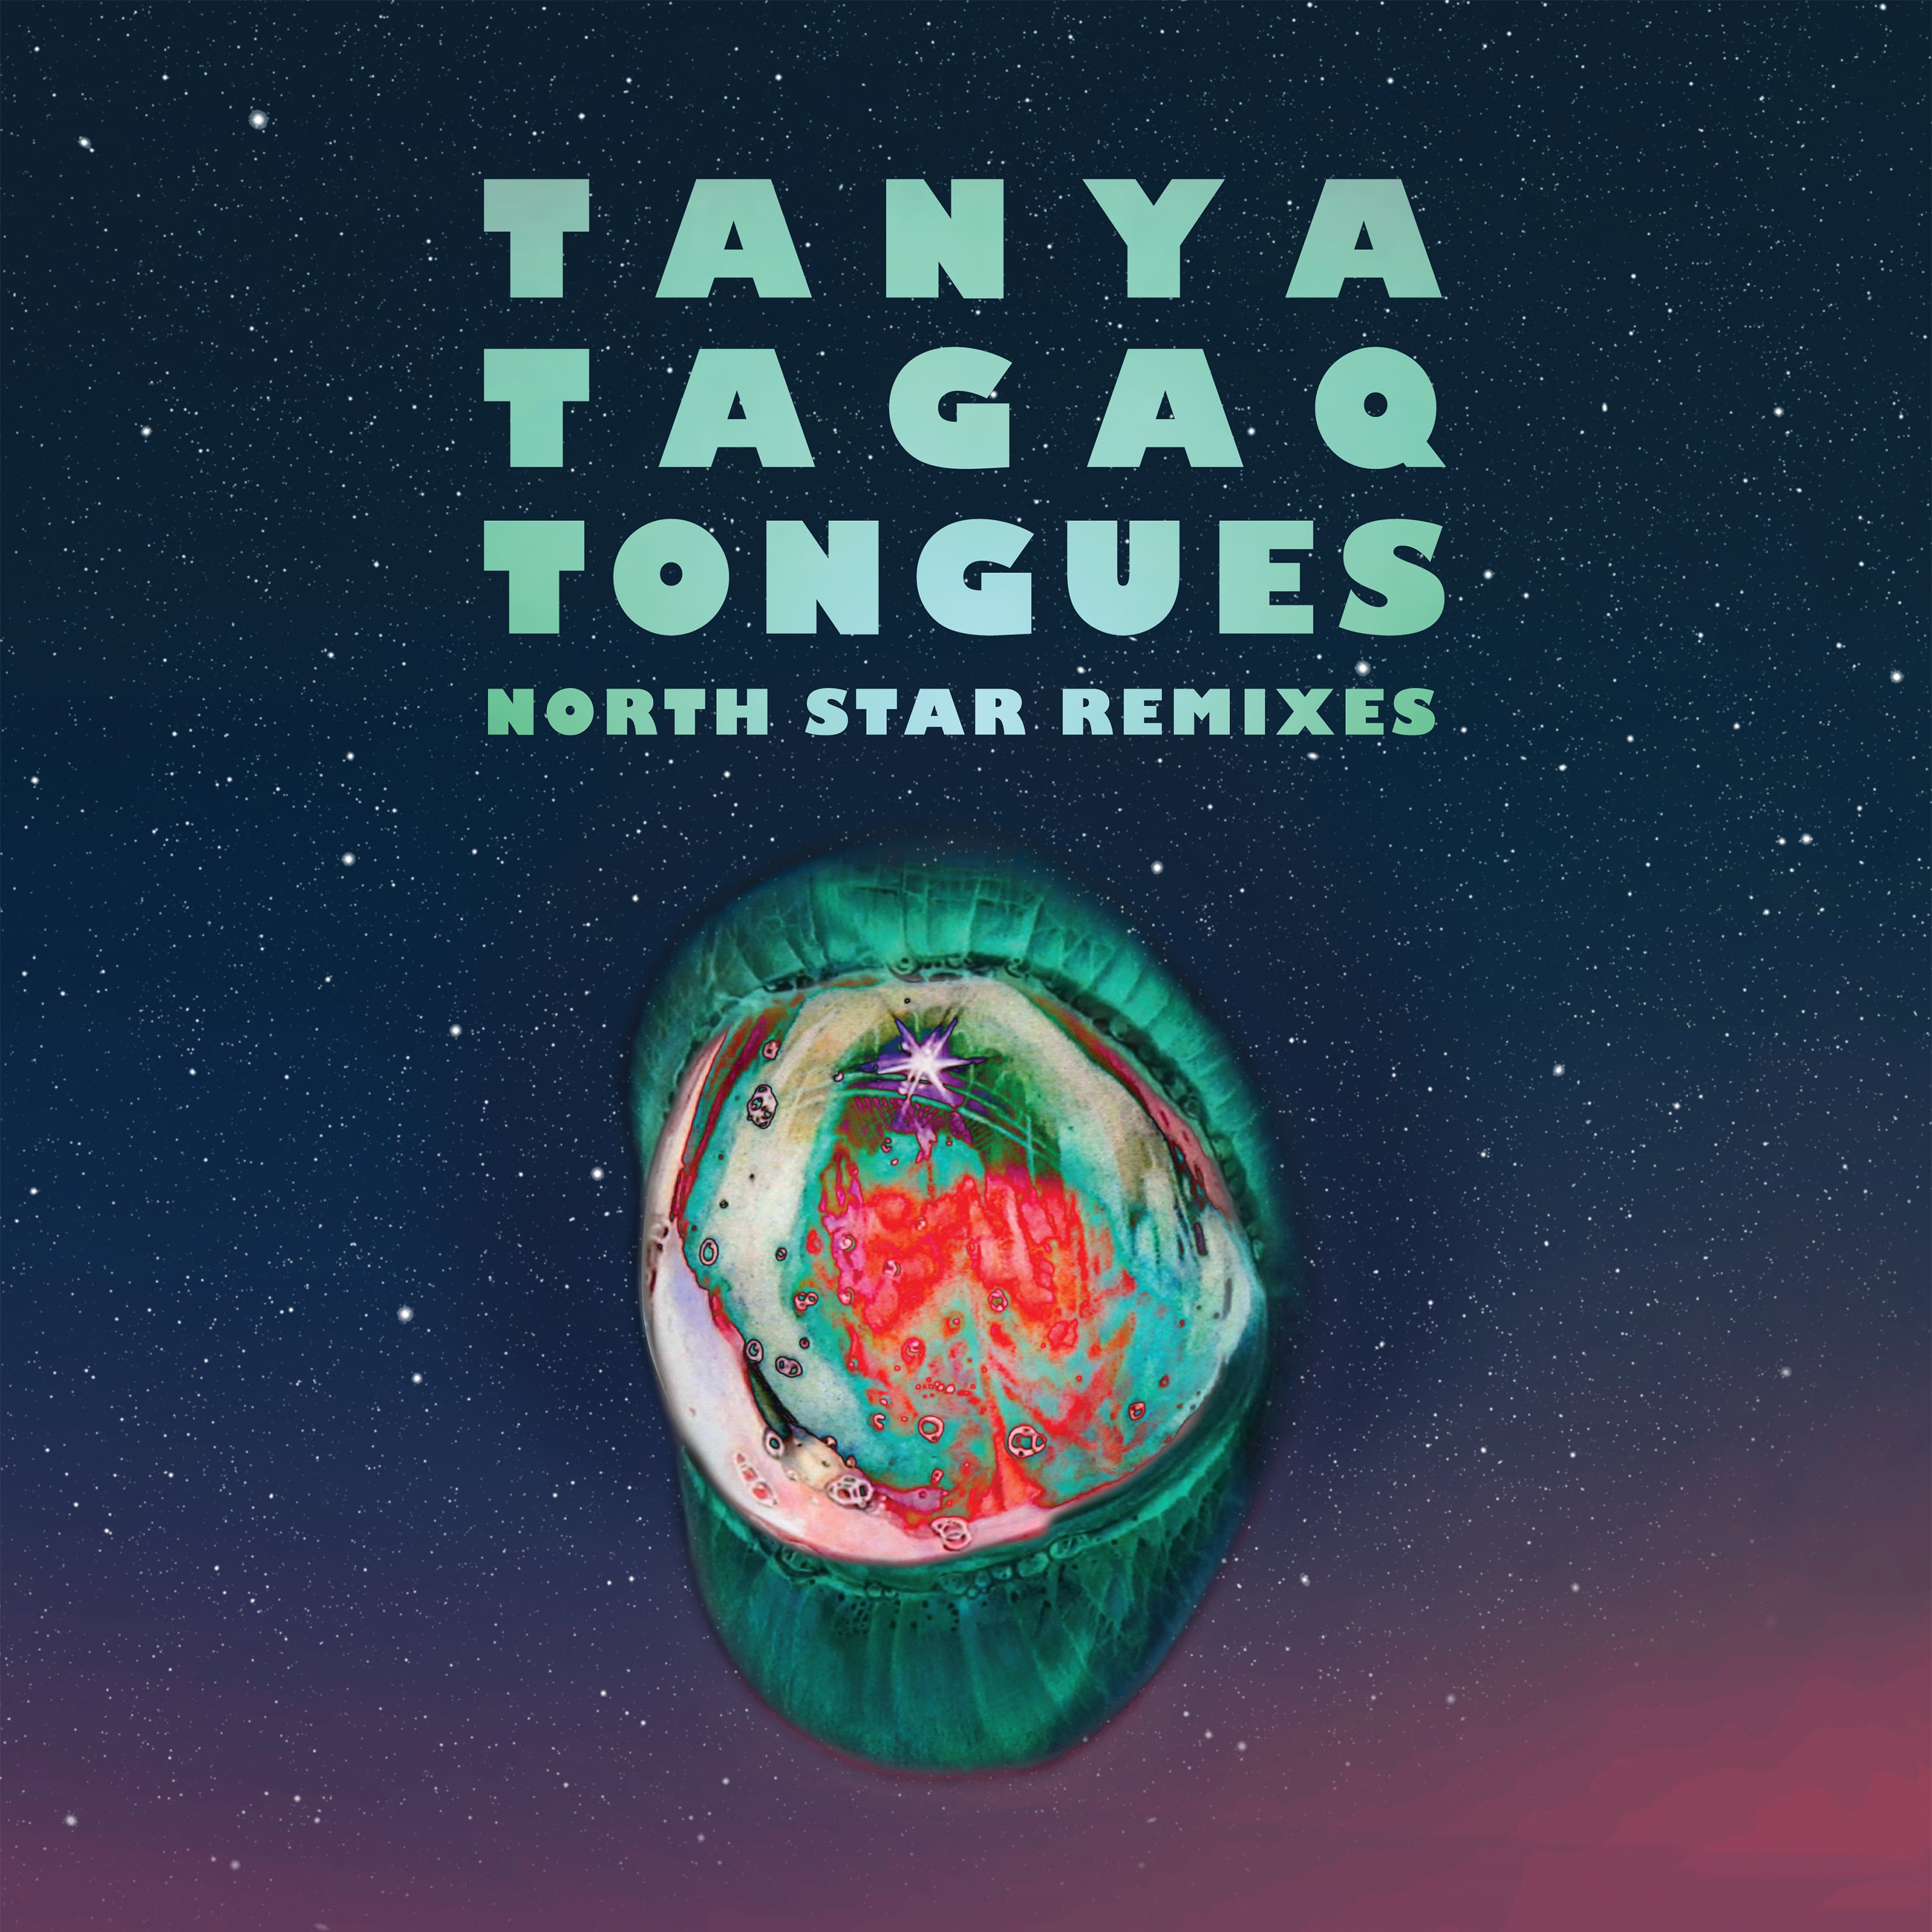 TanyaTagaq-TonguesNorthStarRemixes-Packshot.jpg